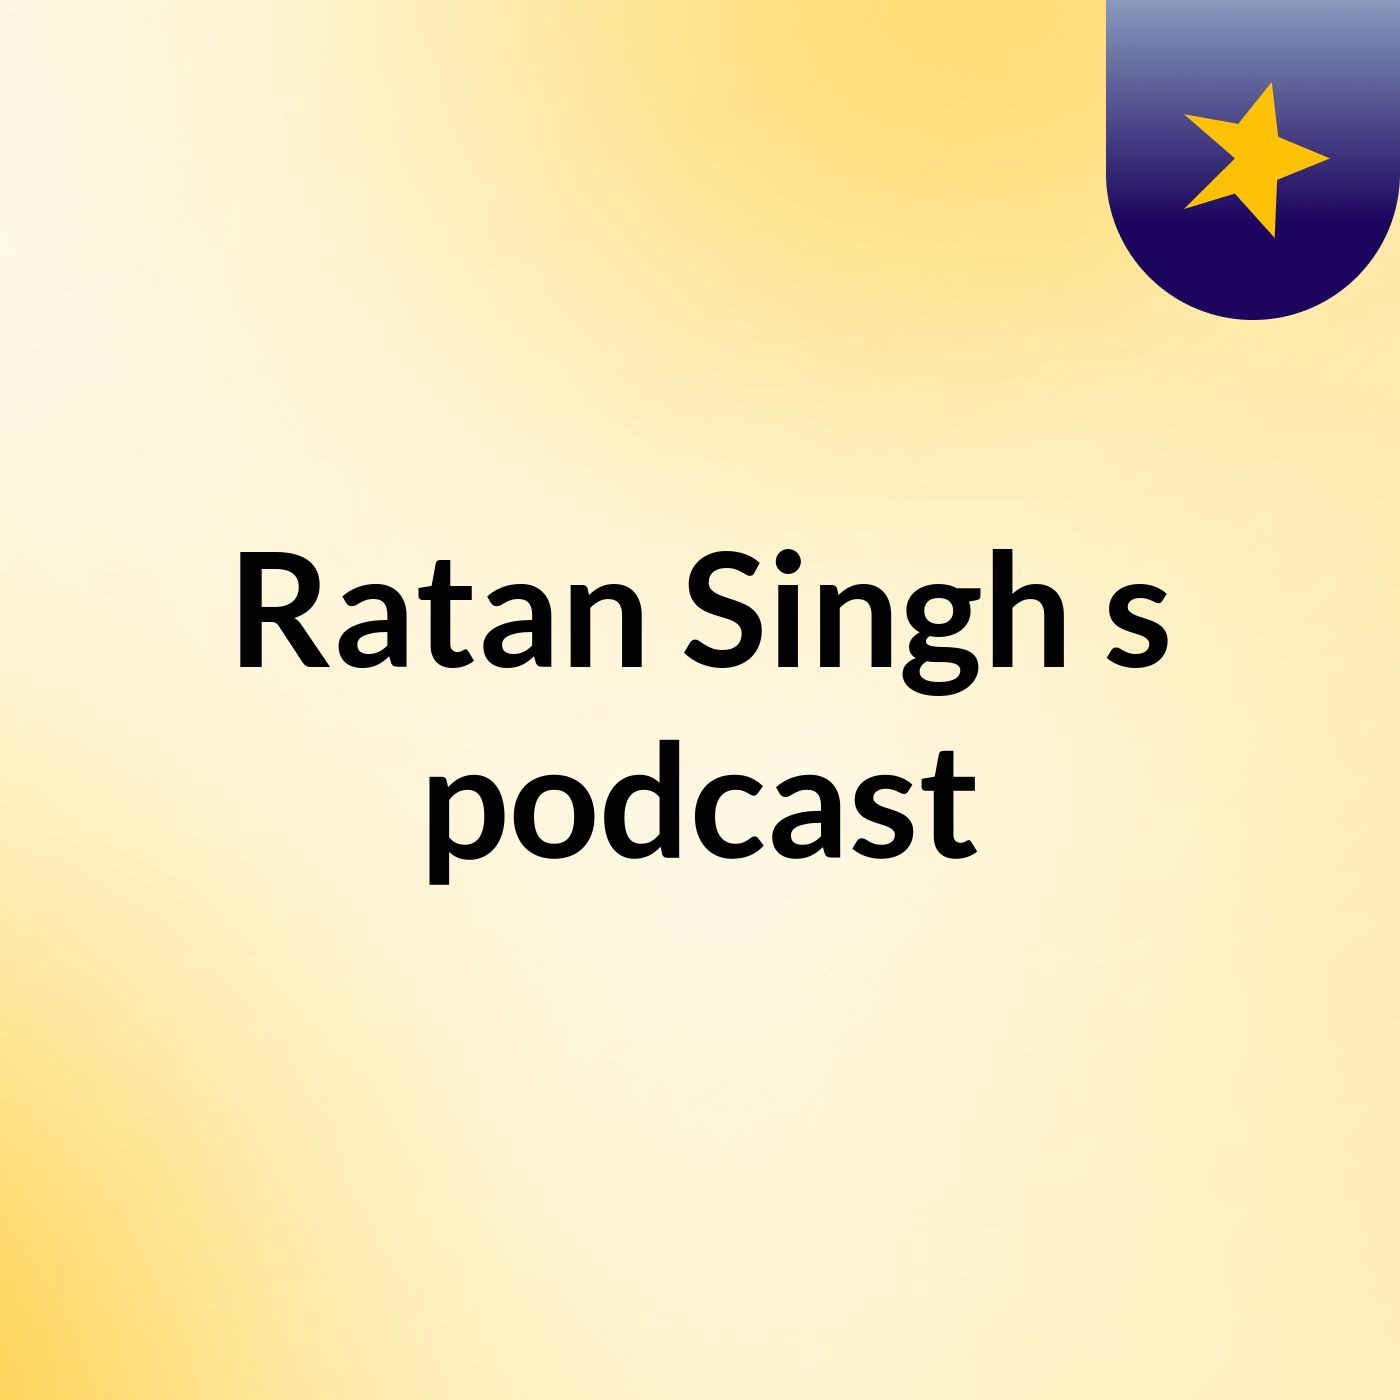 Ratan Singh's podcast